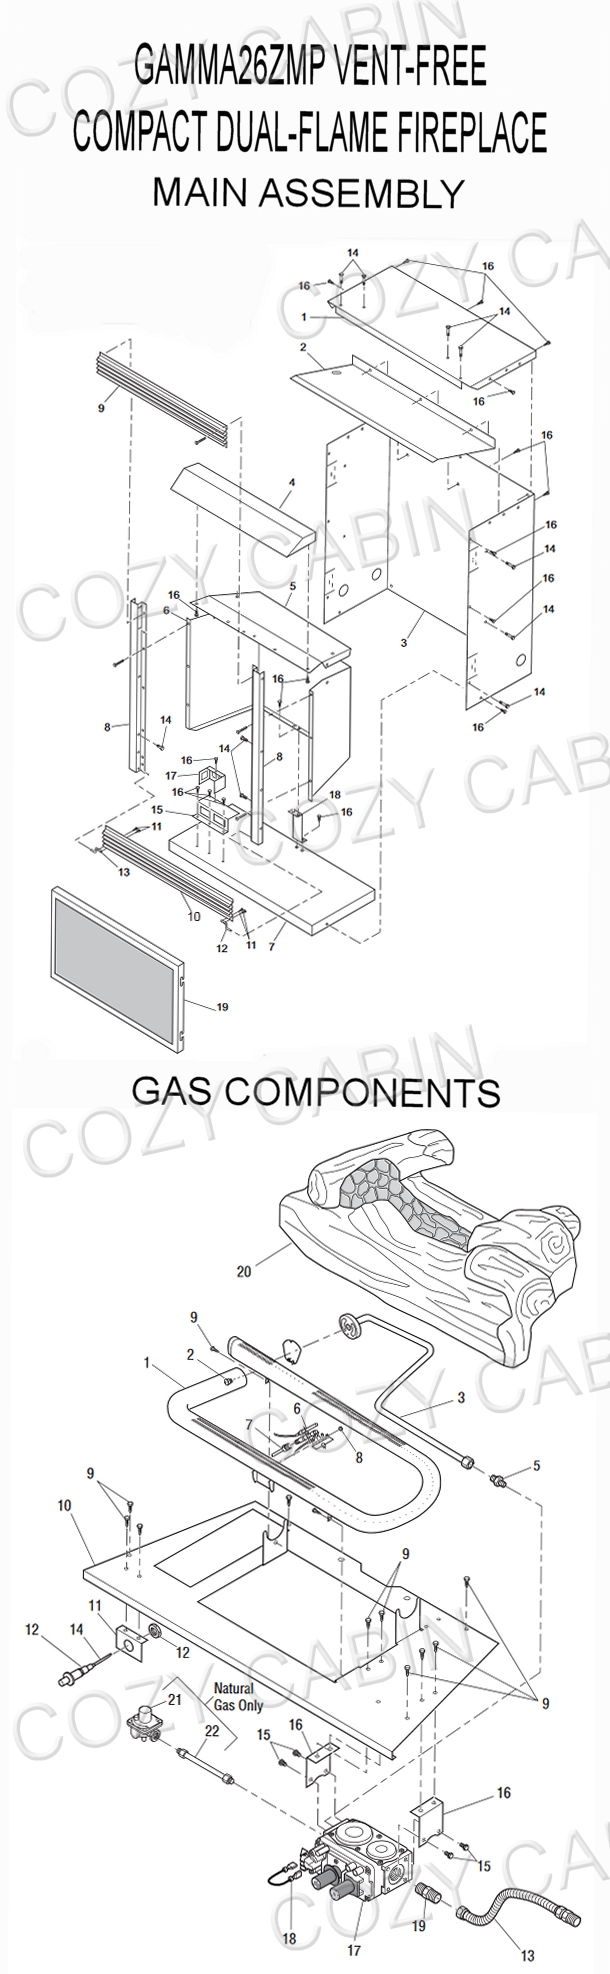 Astria Gamma Vent Free Compact Dual-Flame Propane Gas Fireplace with Millivolt (GAMMA26ZMP) #GAMMA26ZMP